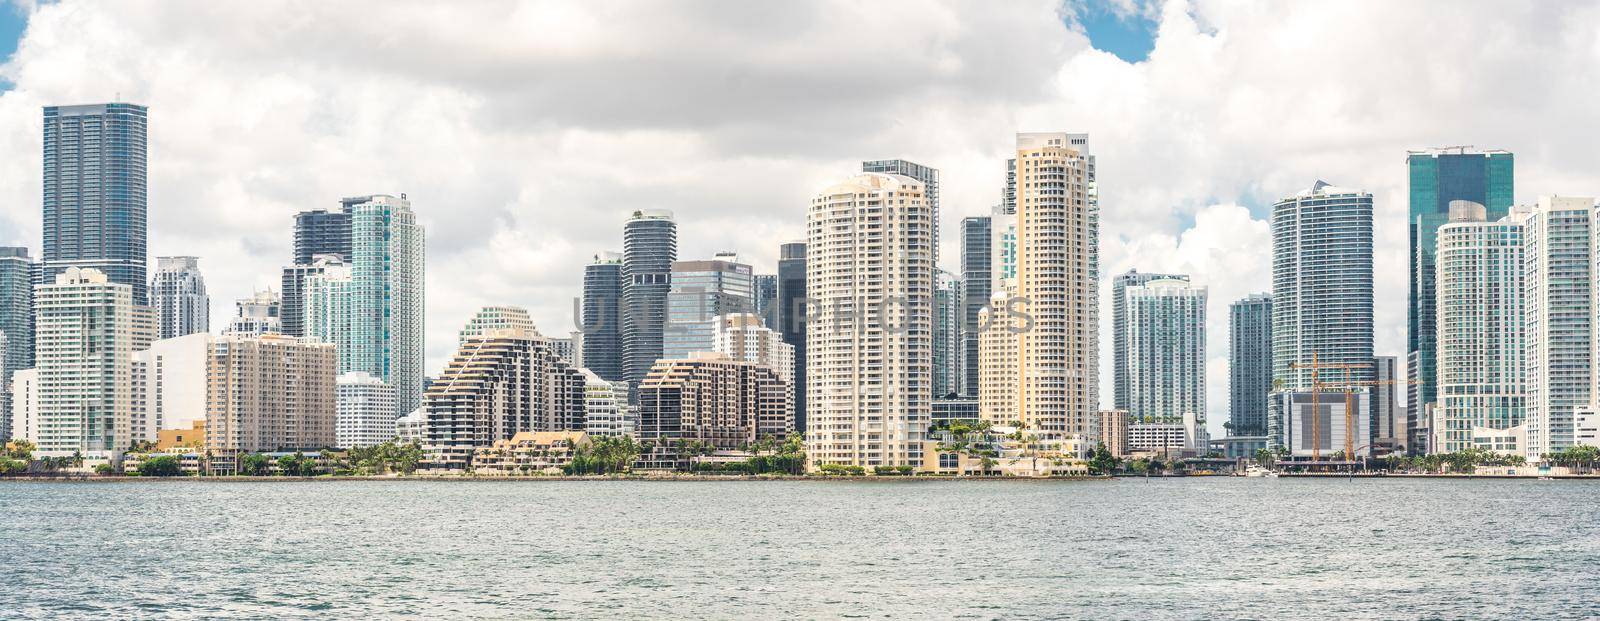 Miami, USA - September 11, 2019: Miami Downtown skyline in daytime with Biscayne Bay